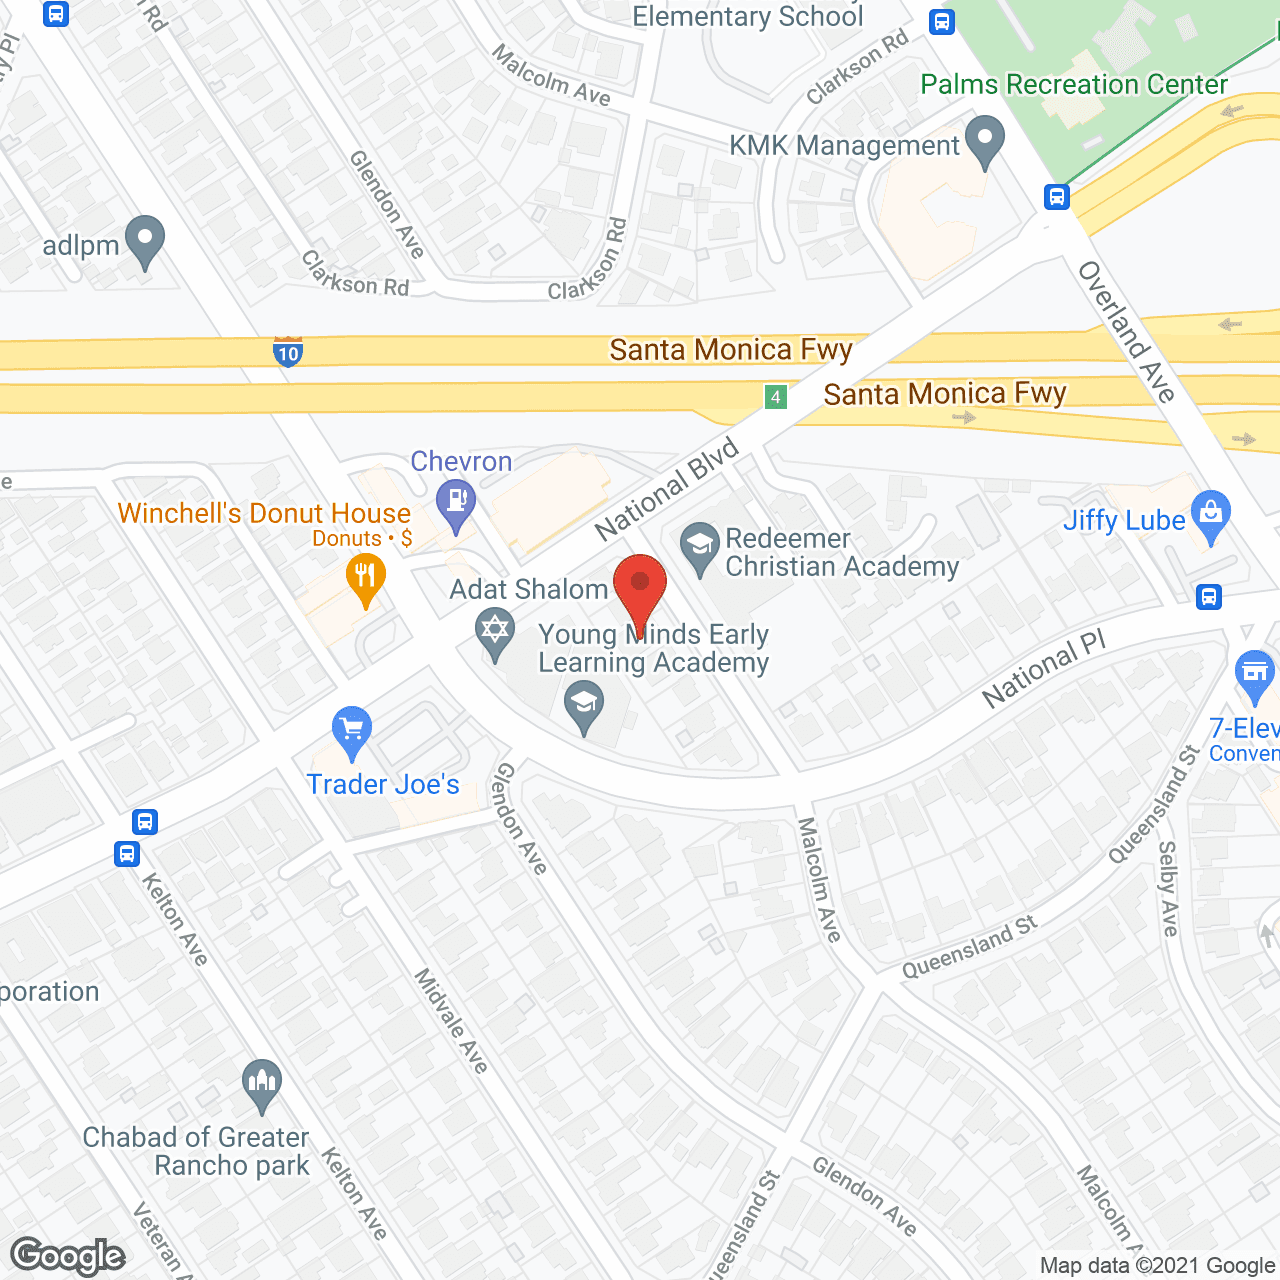 Miko Inn in google map